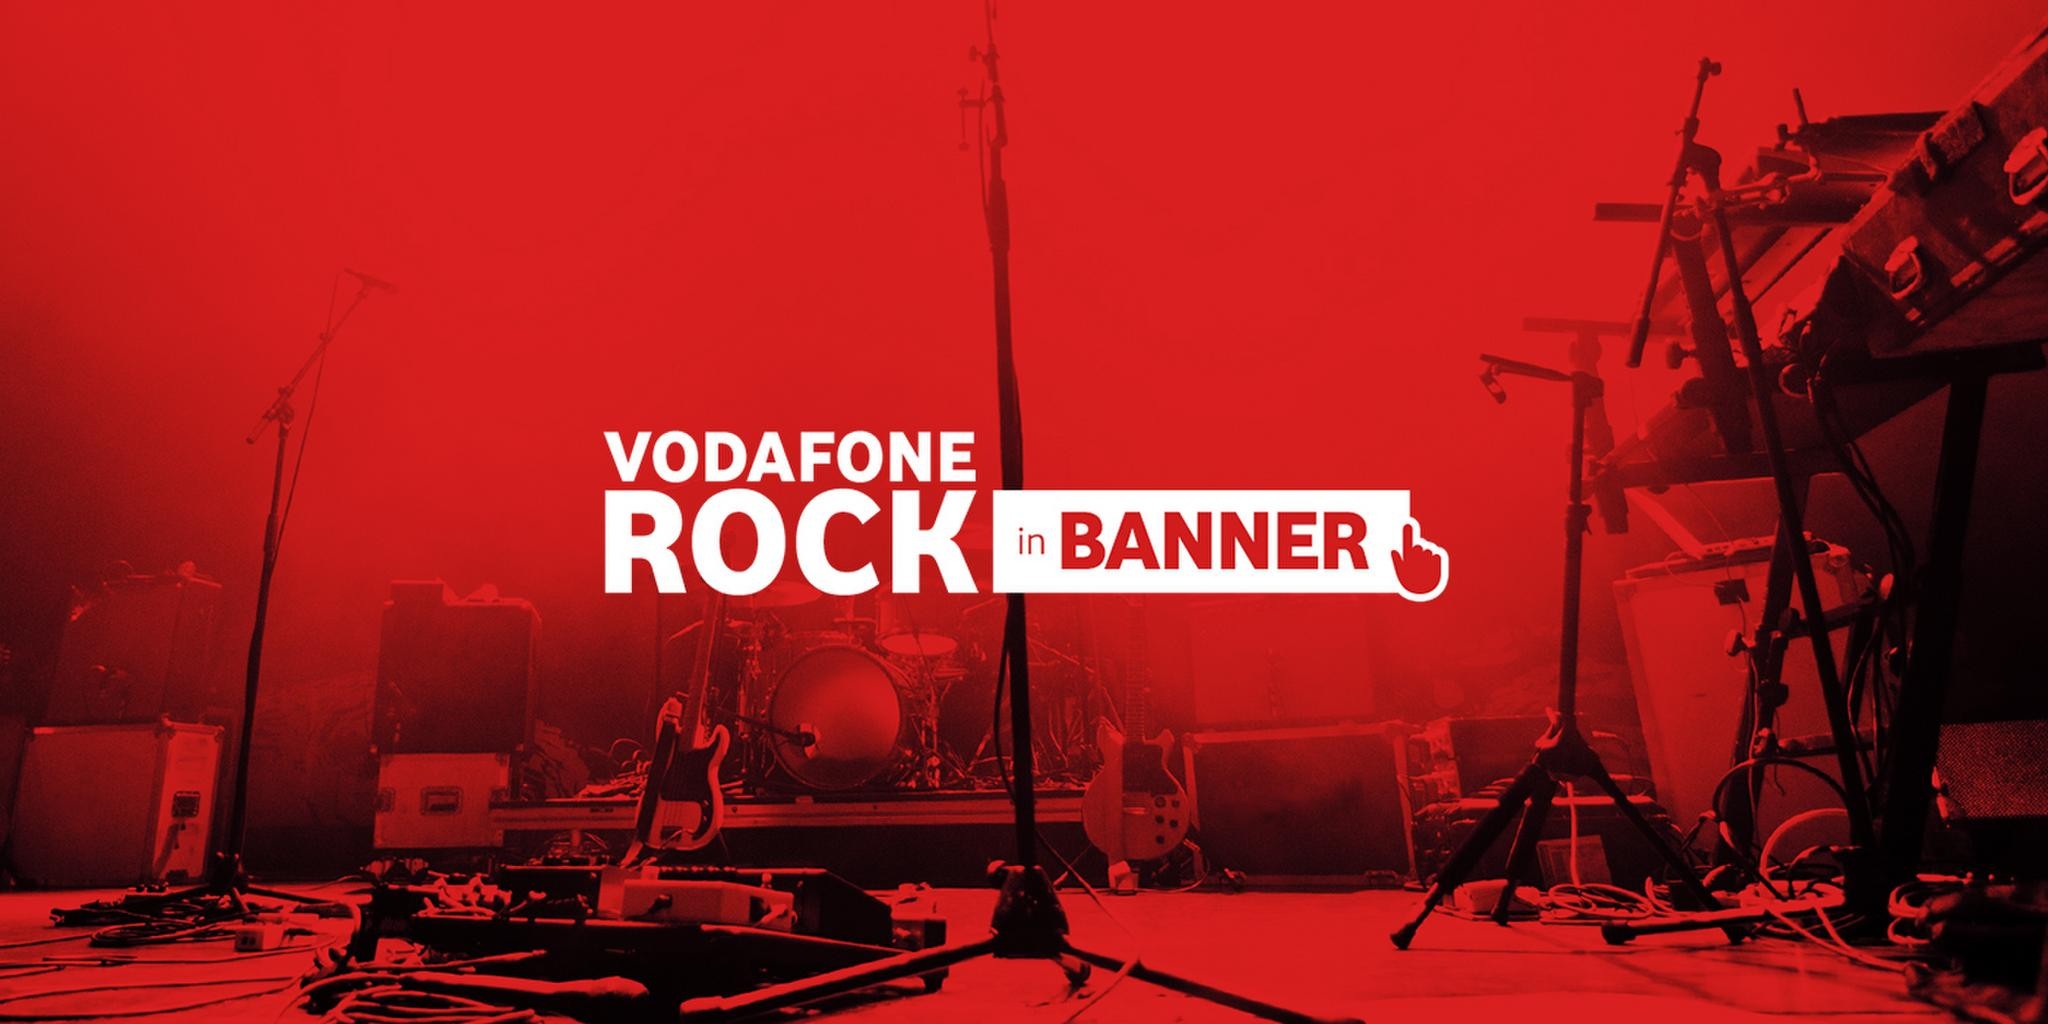 Vodafone Rock in Banner